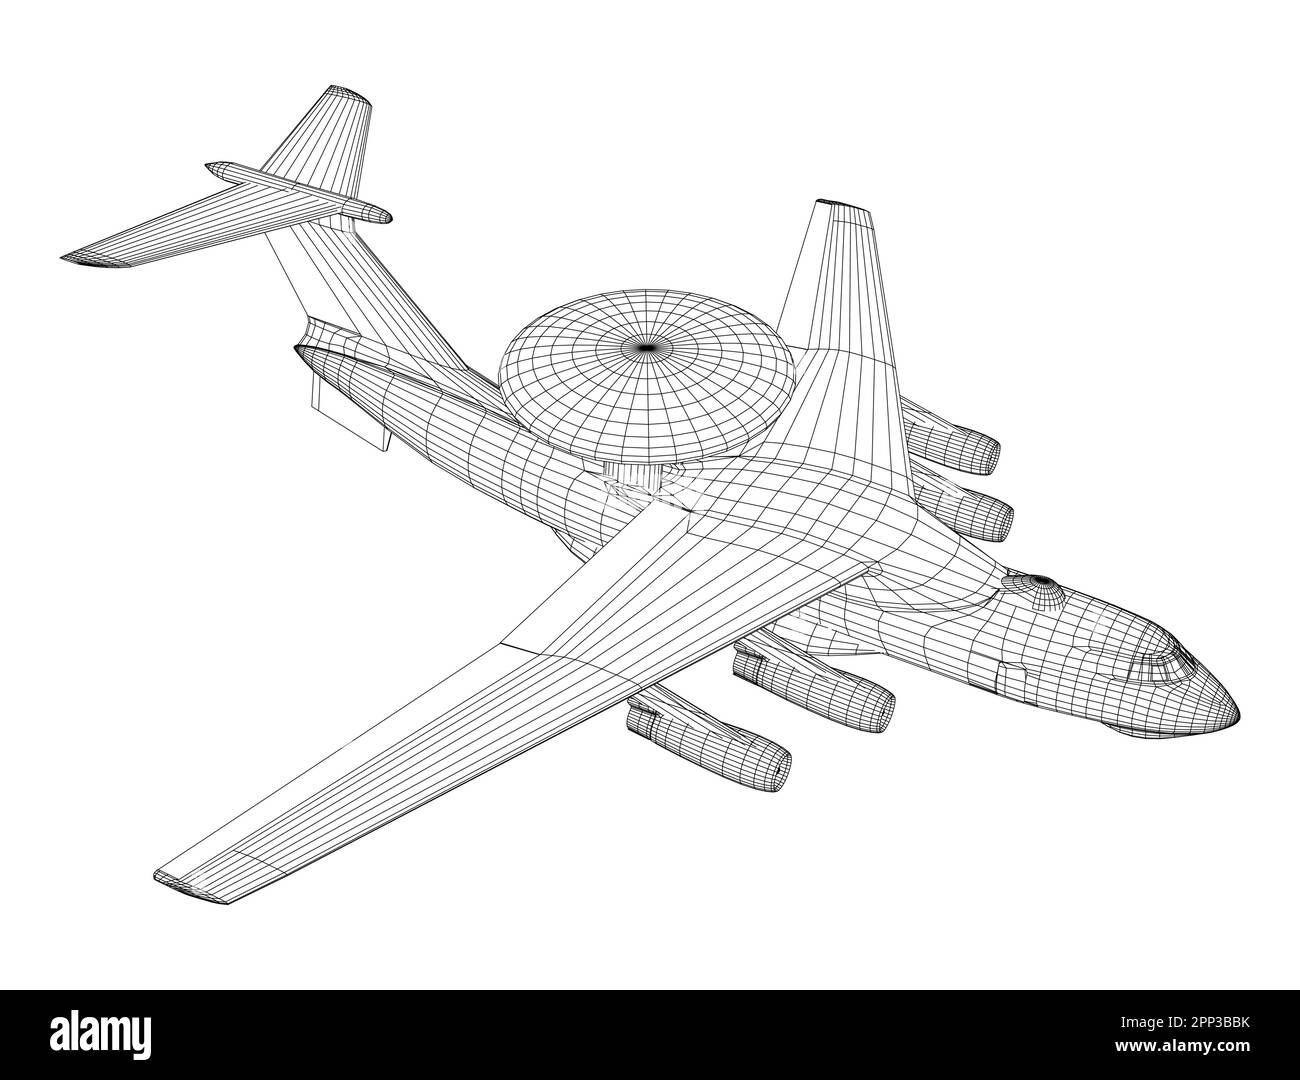 Isometric AWACS Airplane, Radar Aircraft, Military Air Force Plane ...